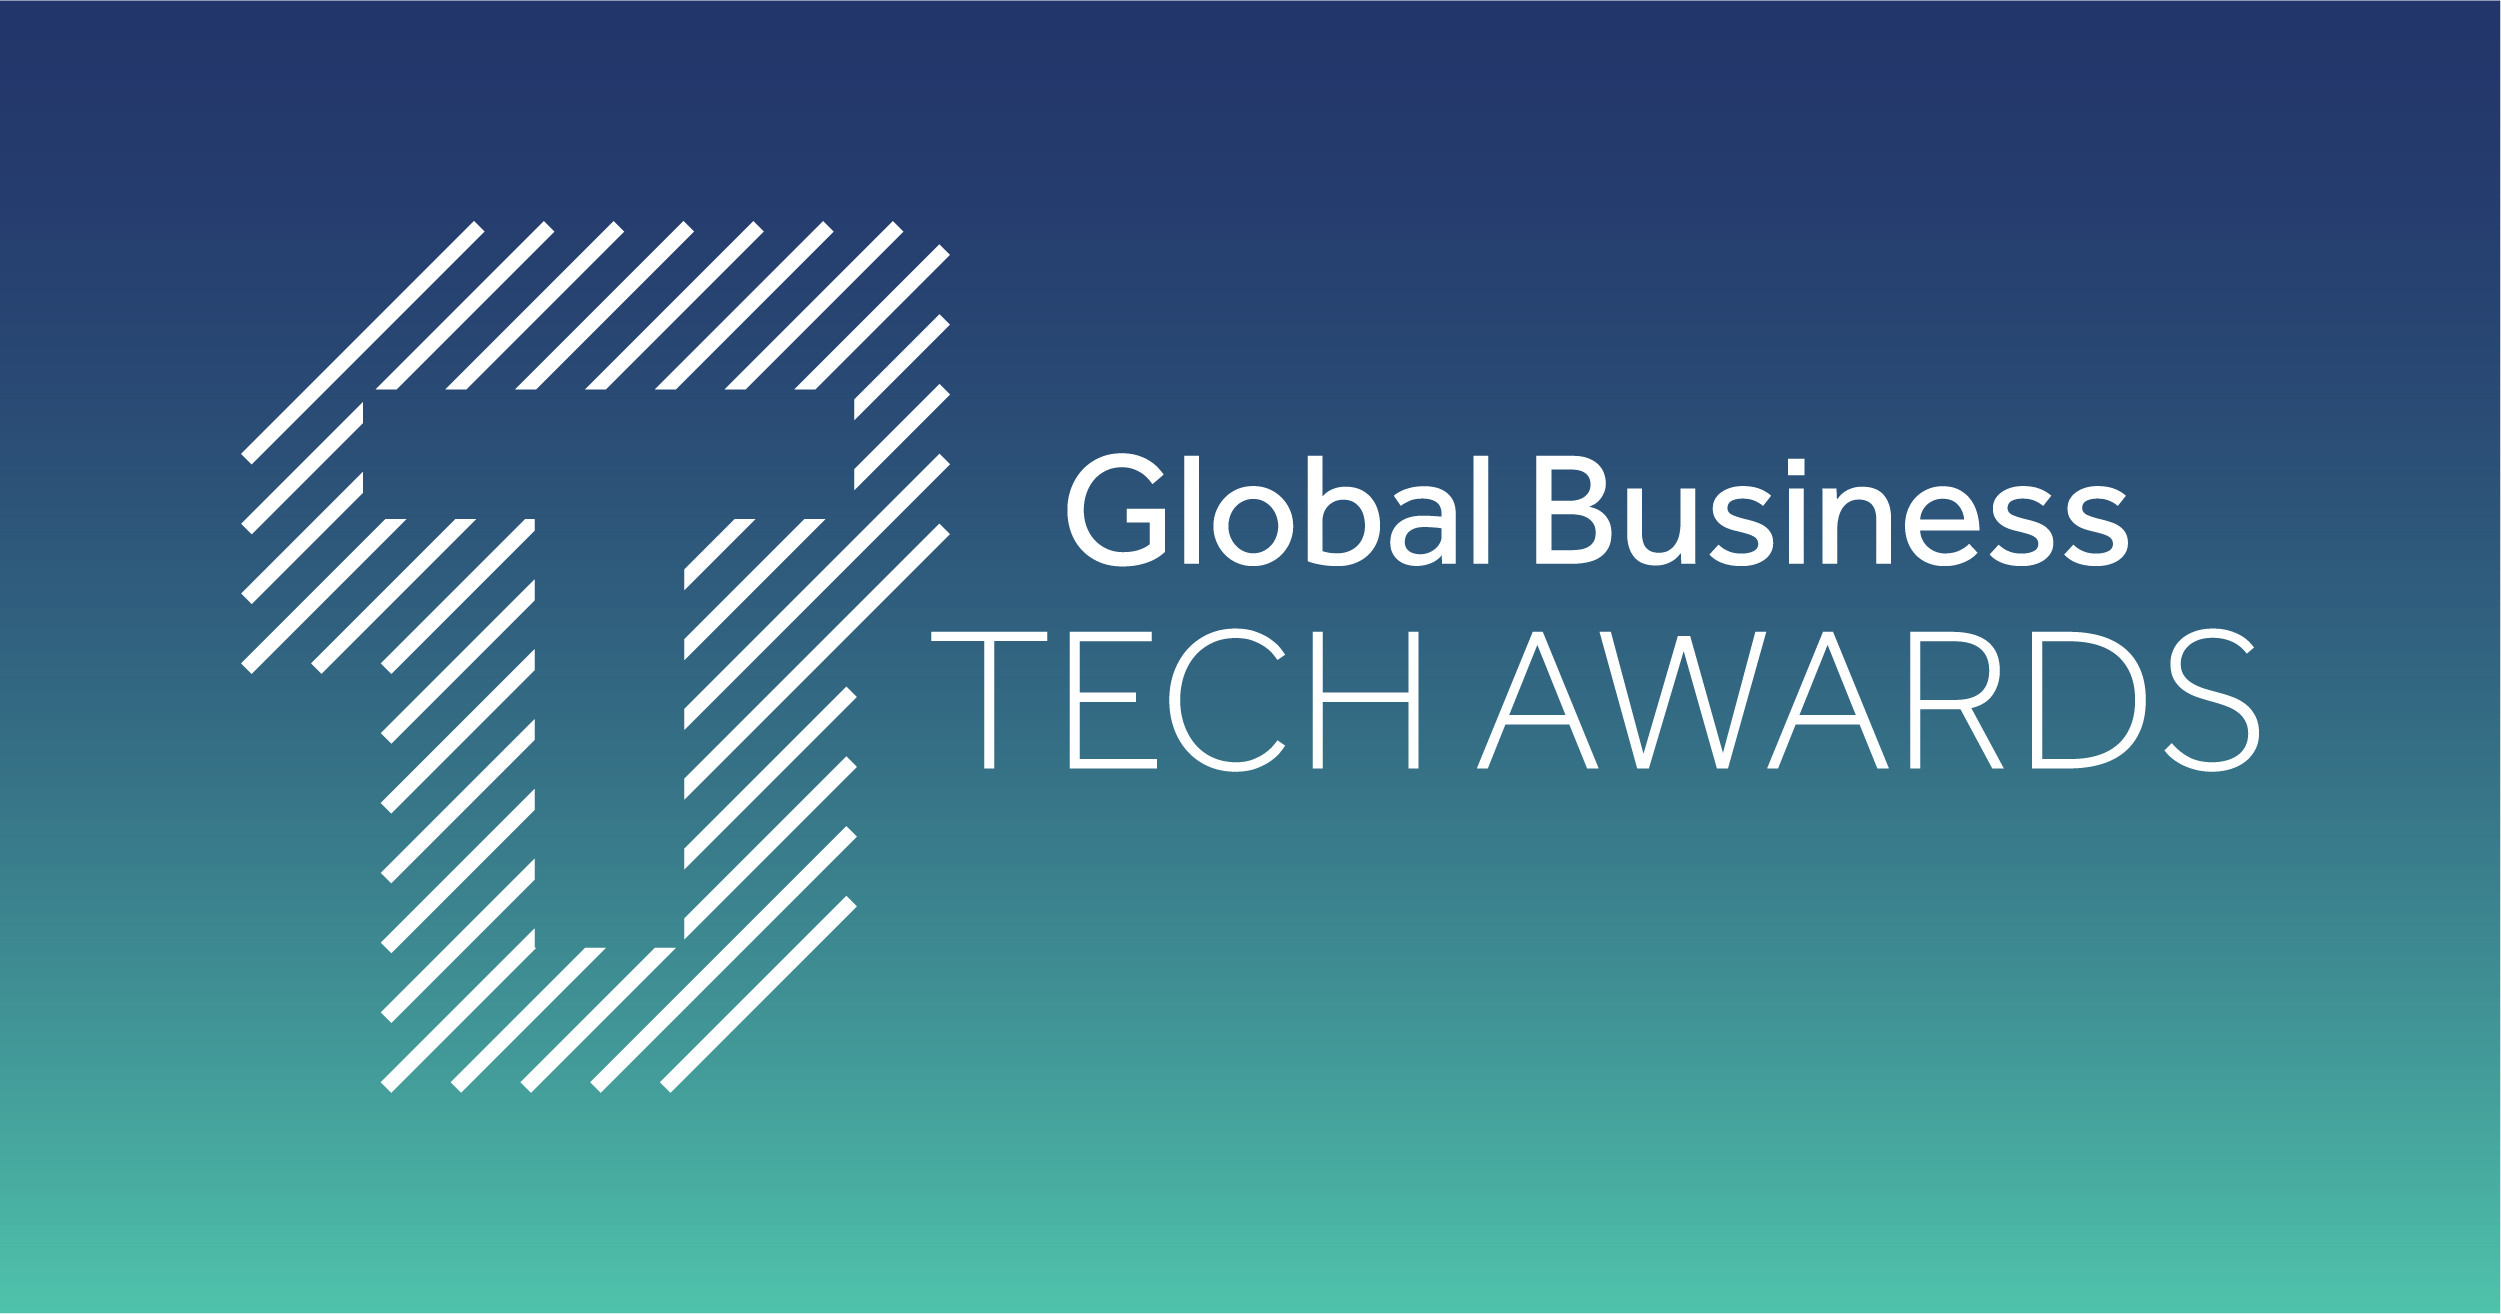 Global Business Tech Awards logo